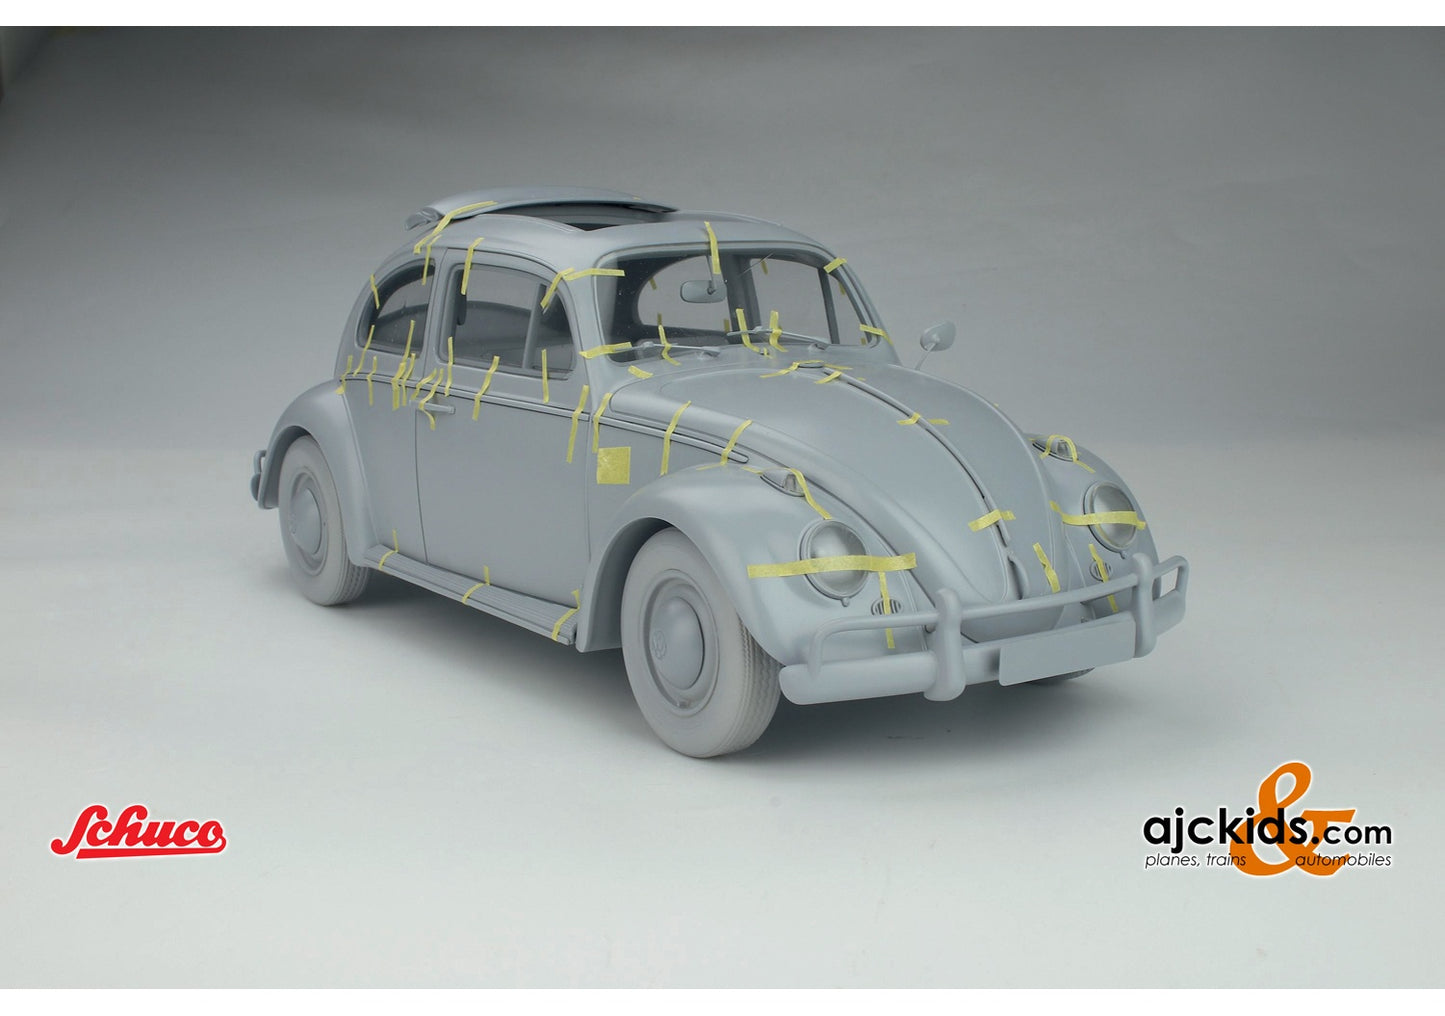 Schuco 450046200 - VW Beetle RALLYE white 1:12